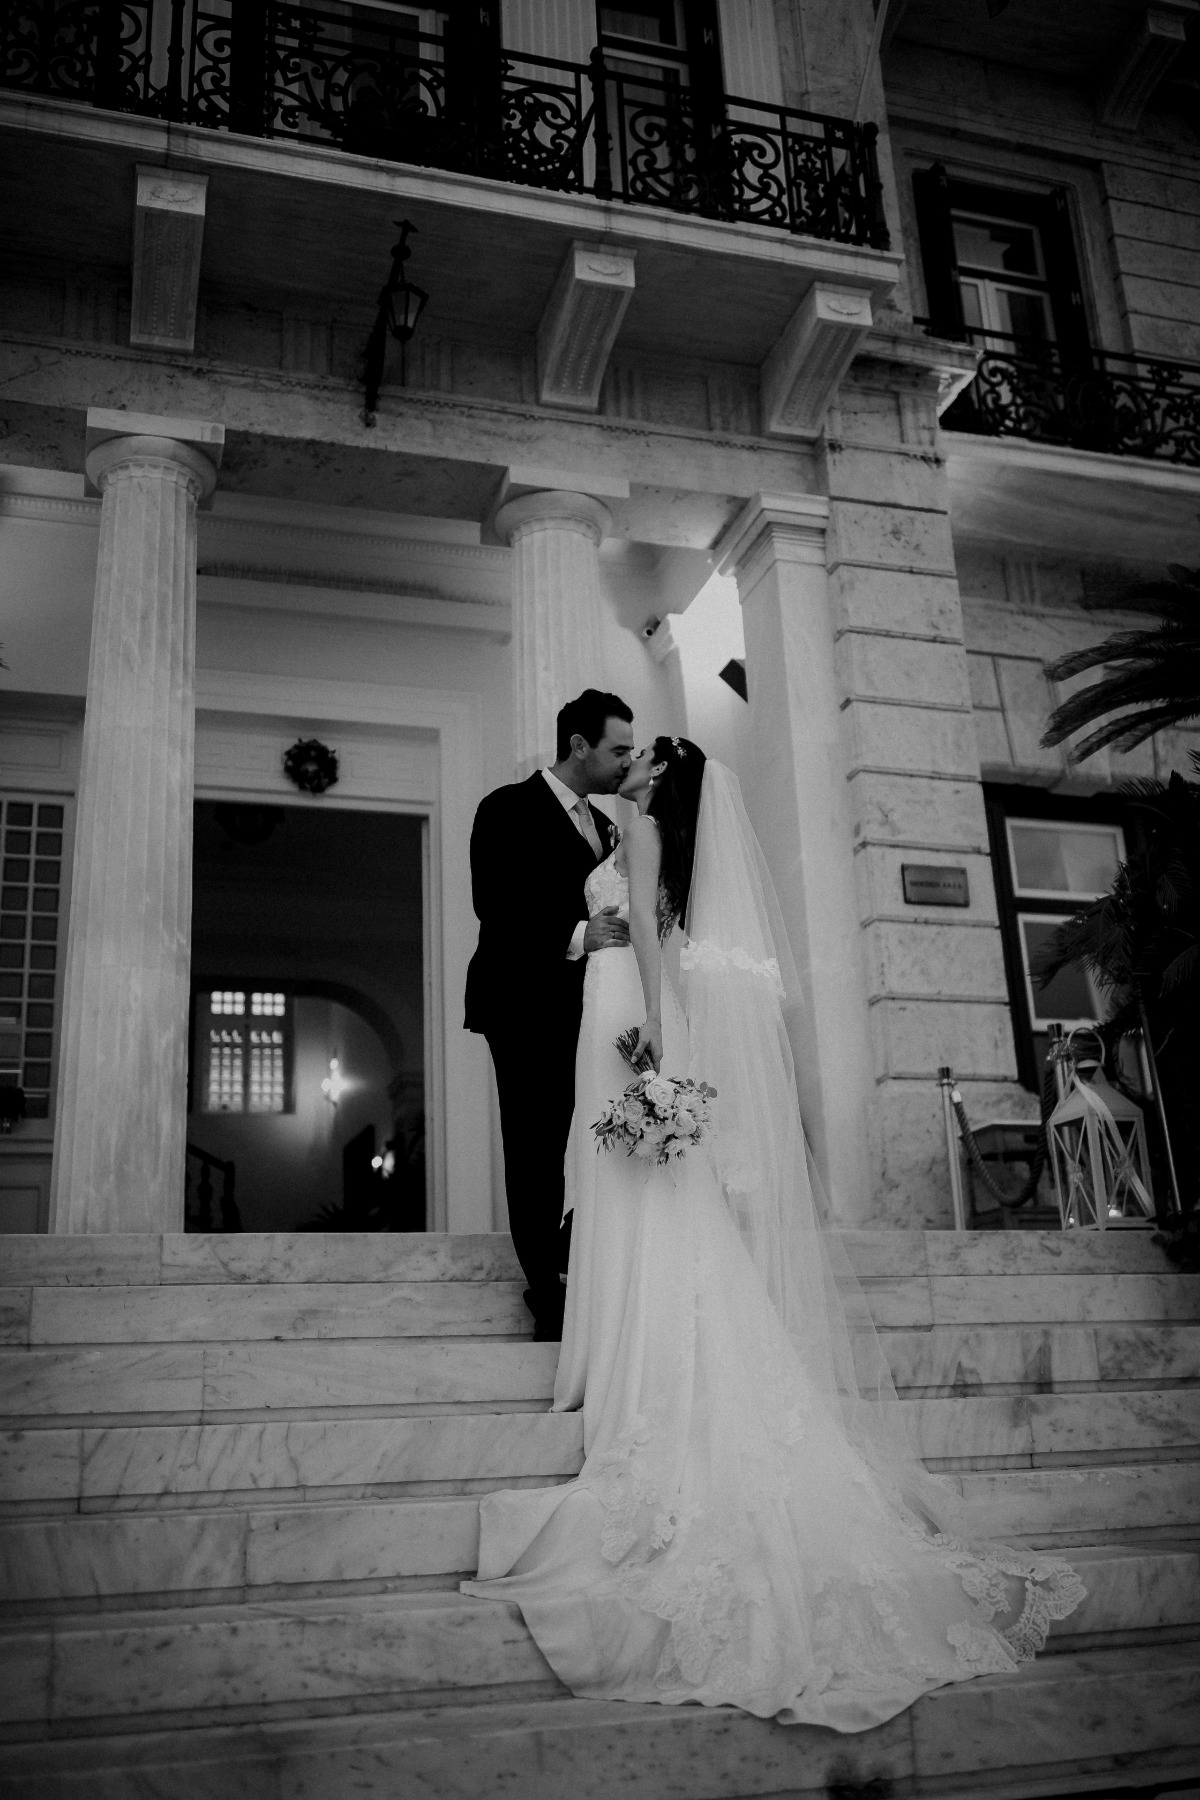 Love this elegant Greek wedding